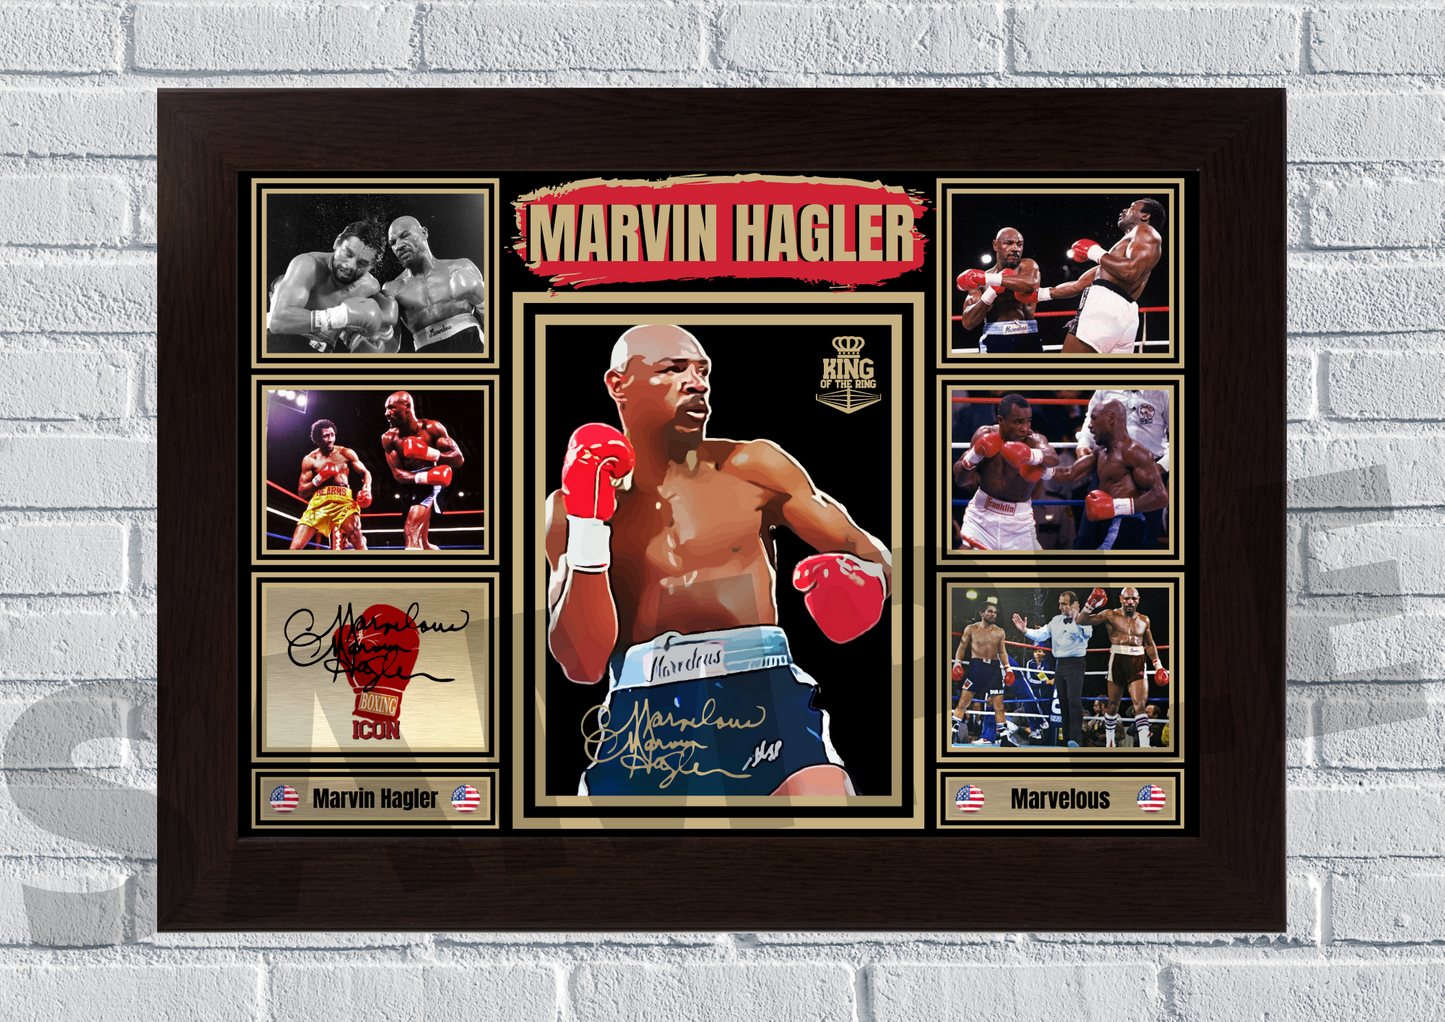 Marvelous Marvin Hagler memorabilia (Boxing) #110 - Signed print